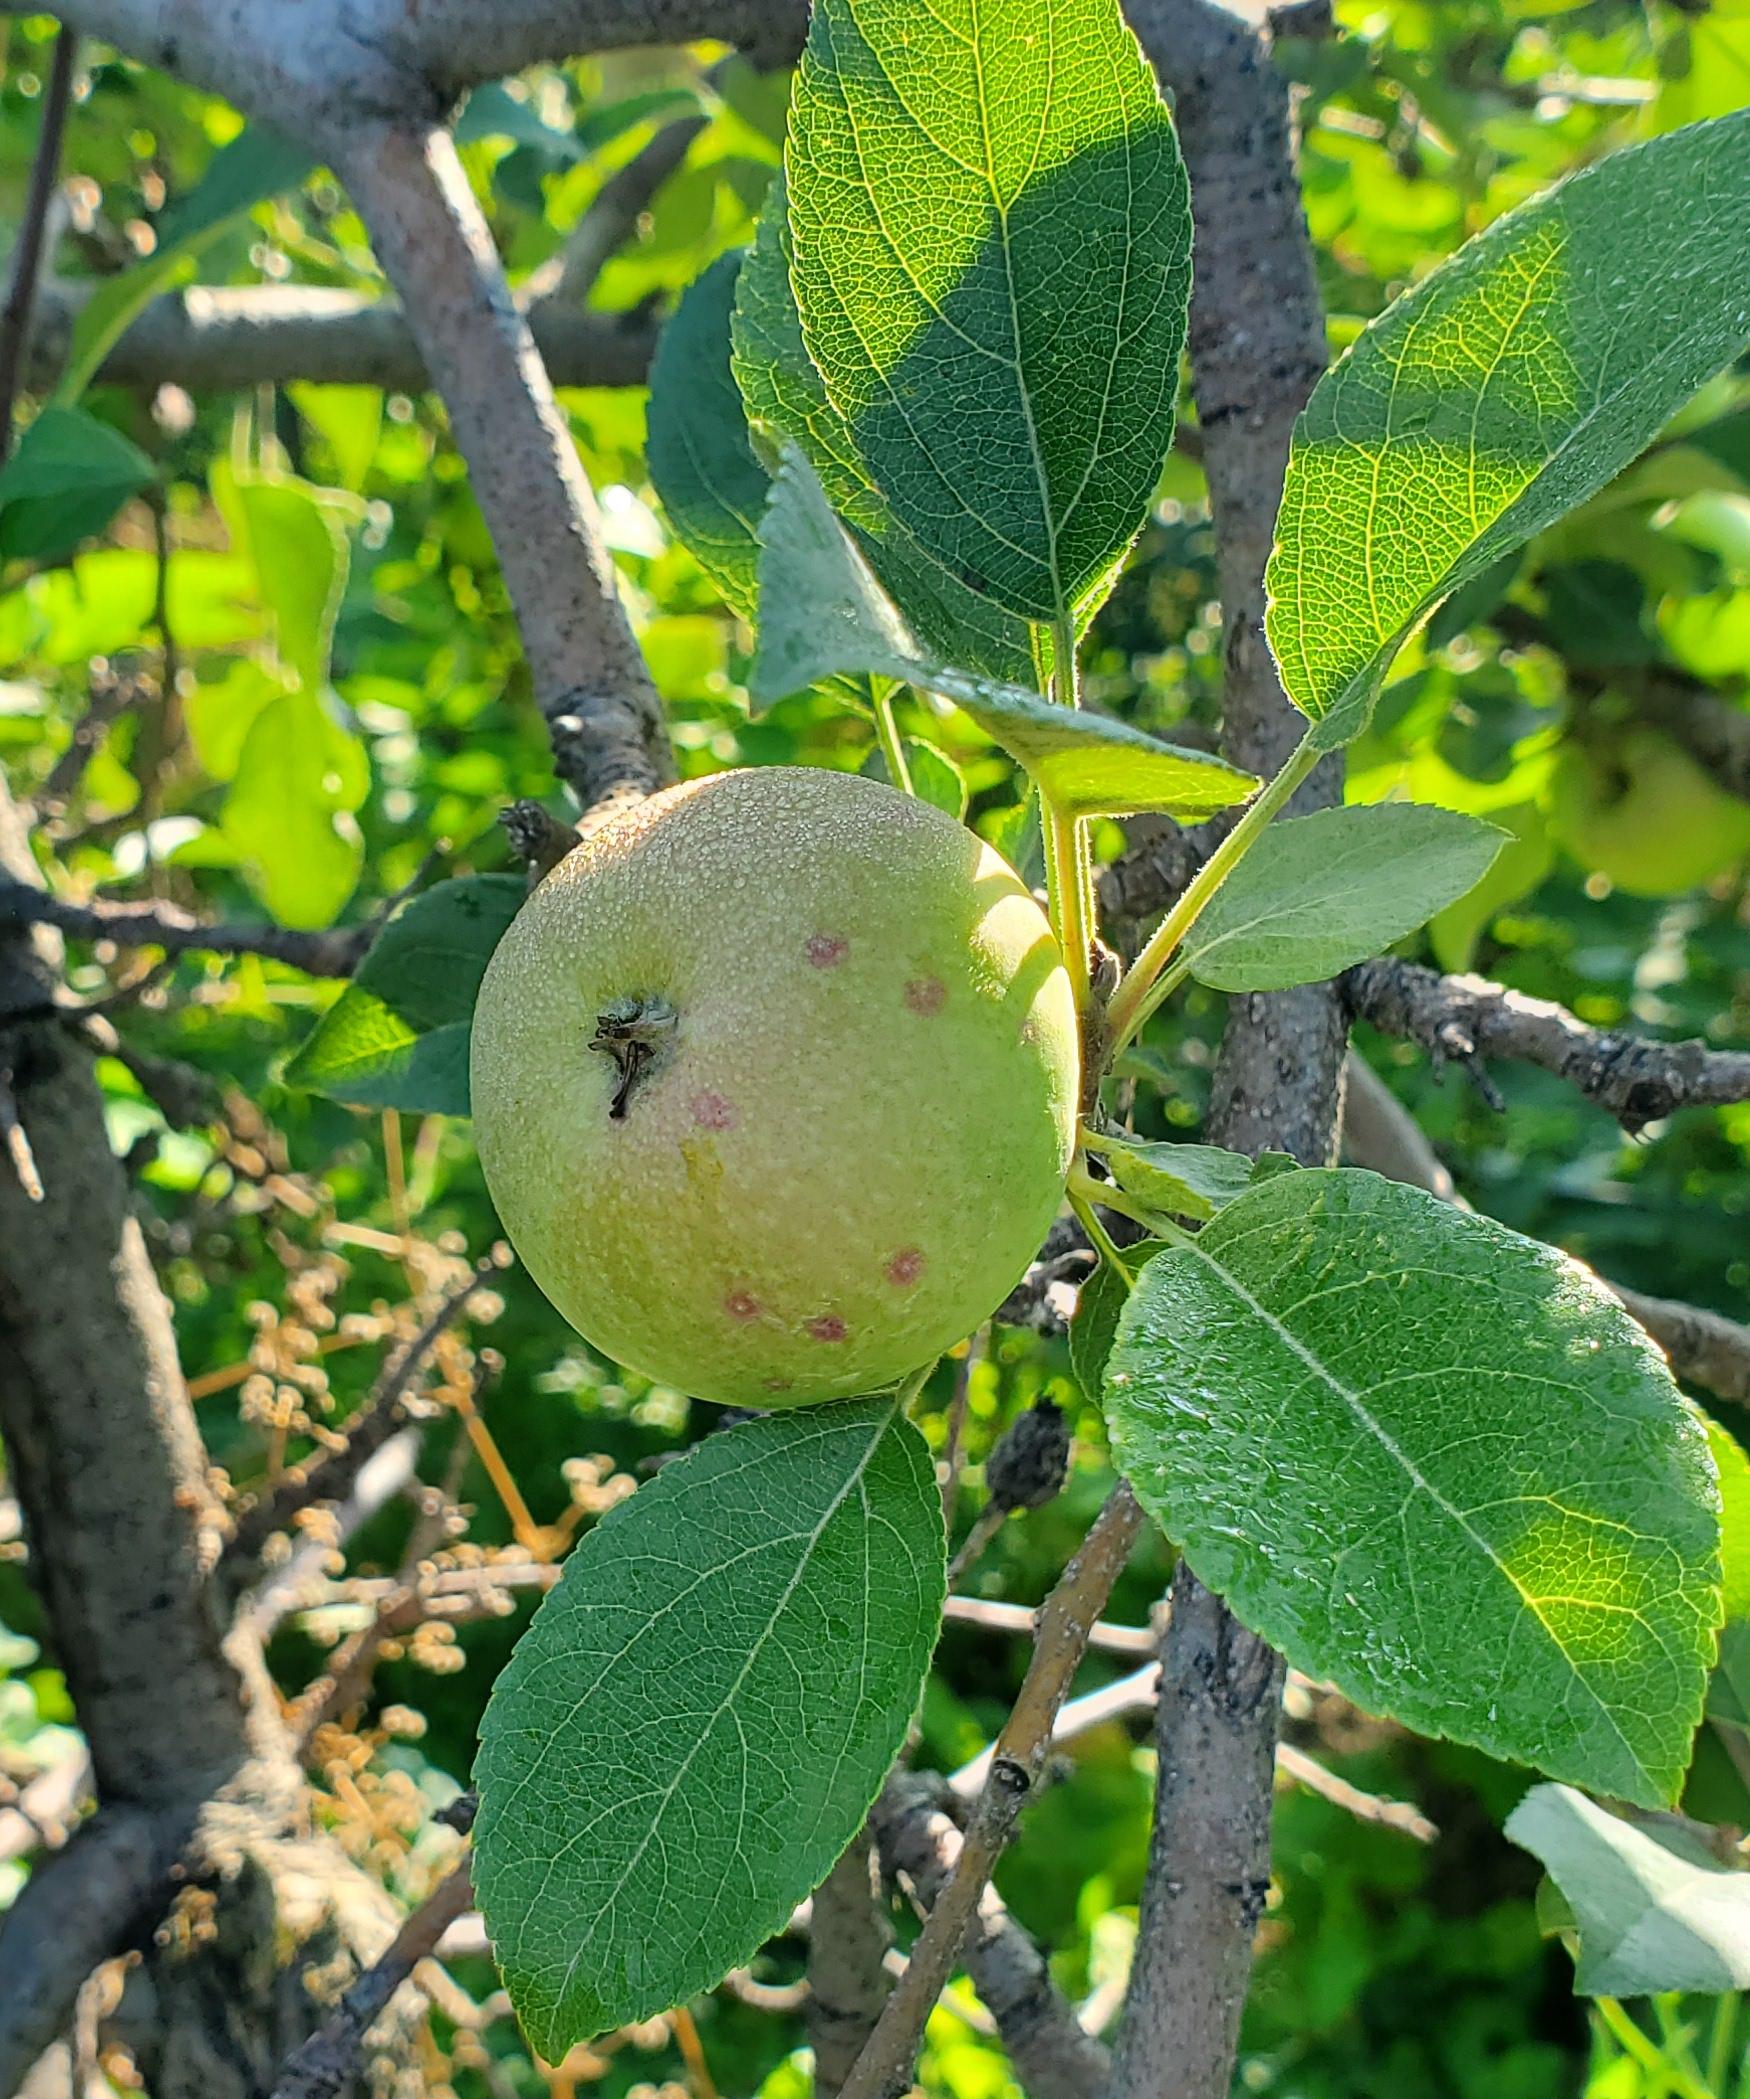 San Jose scale on an apple